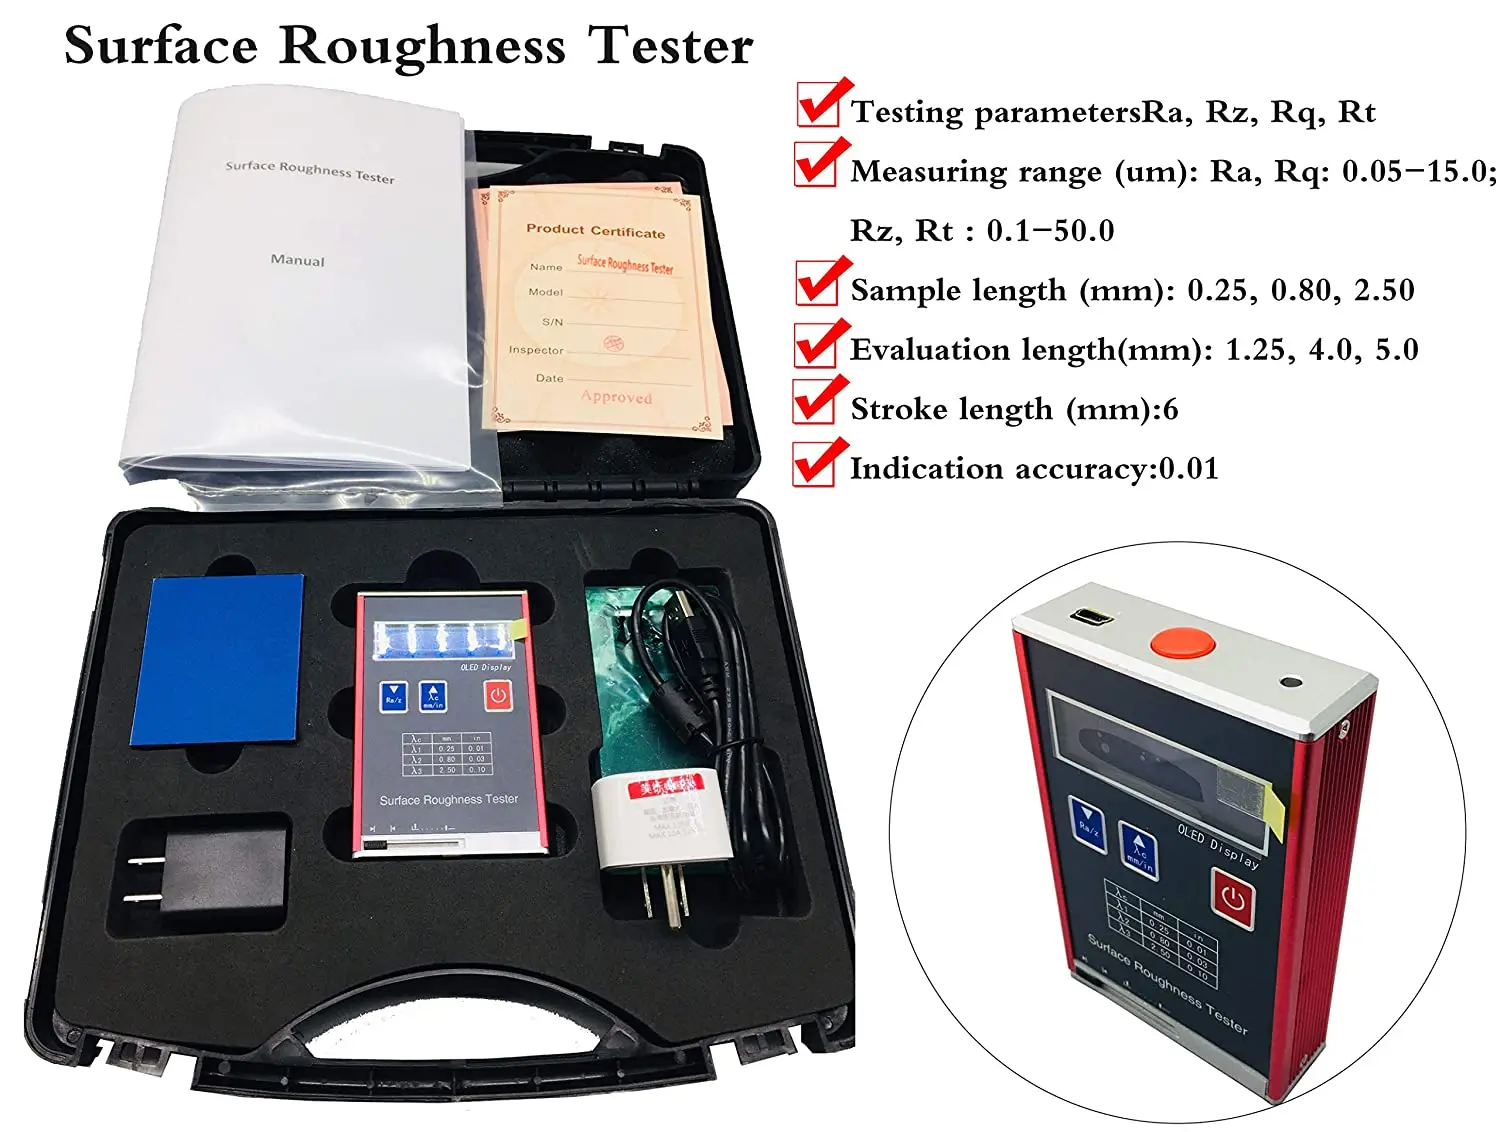 

Digital Surface Roughness Tester Portable Surface Profilometer Gauge Meter with Ra Rq 0.05 to 15.0 Measuring Range